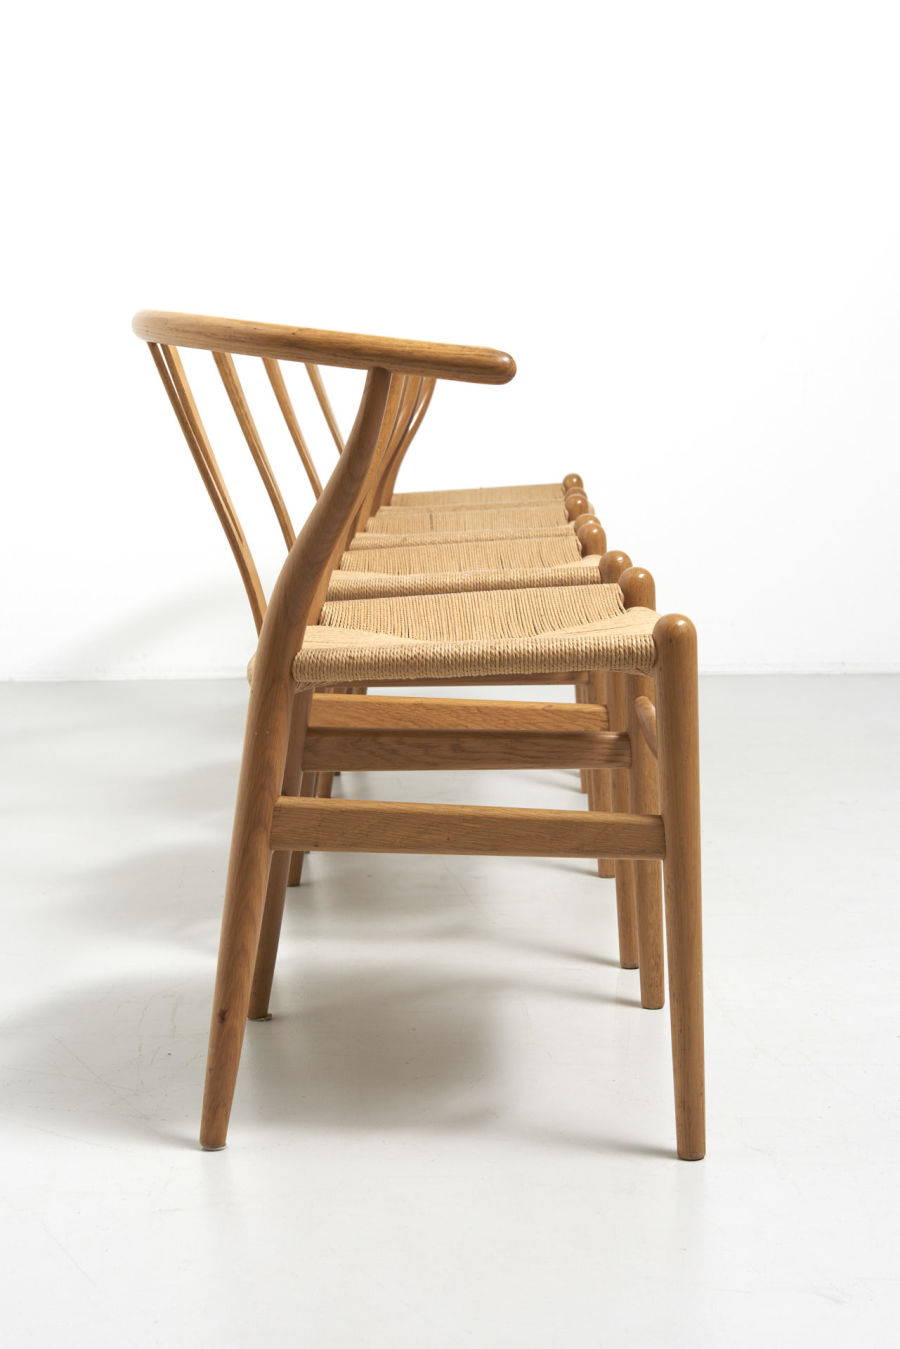 modestfurniture-vintage-1957-wishbone-chairs-hans-wegner02